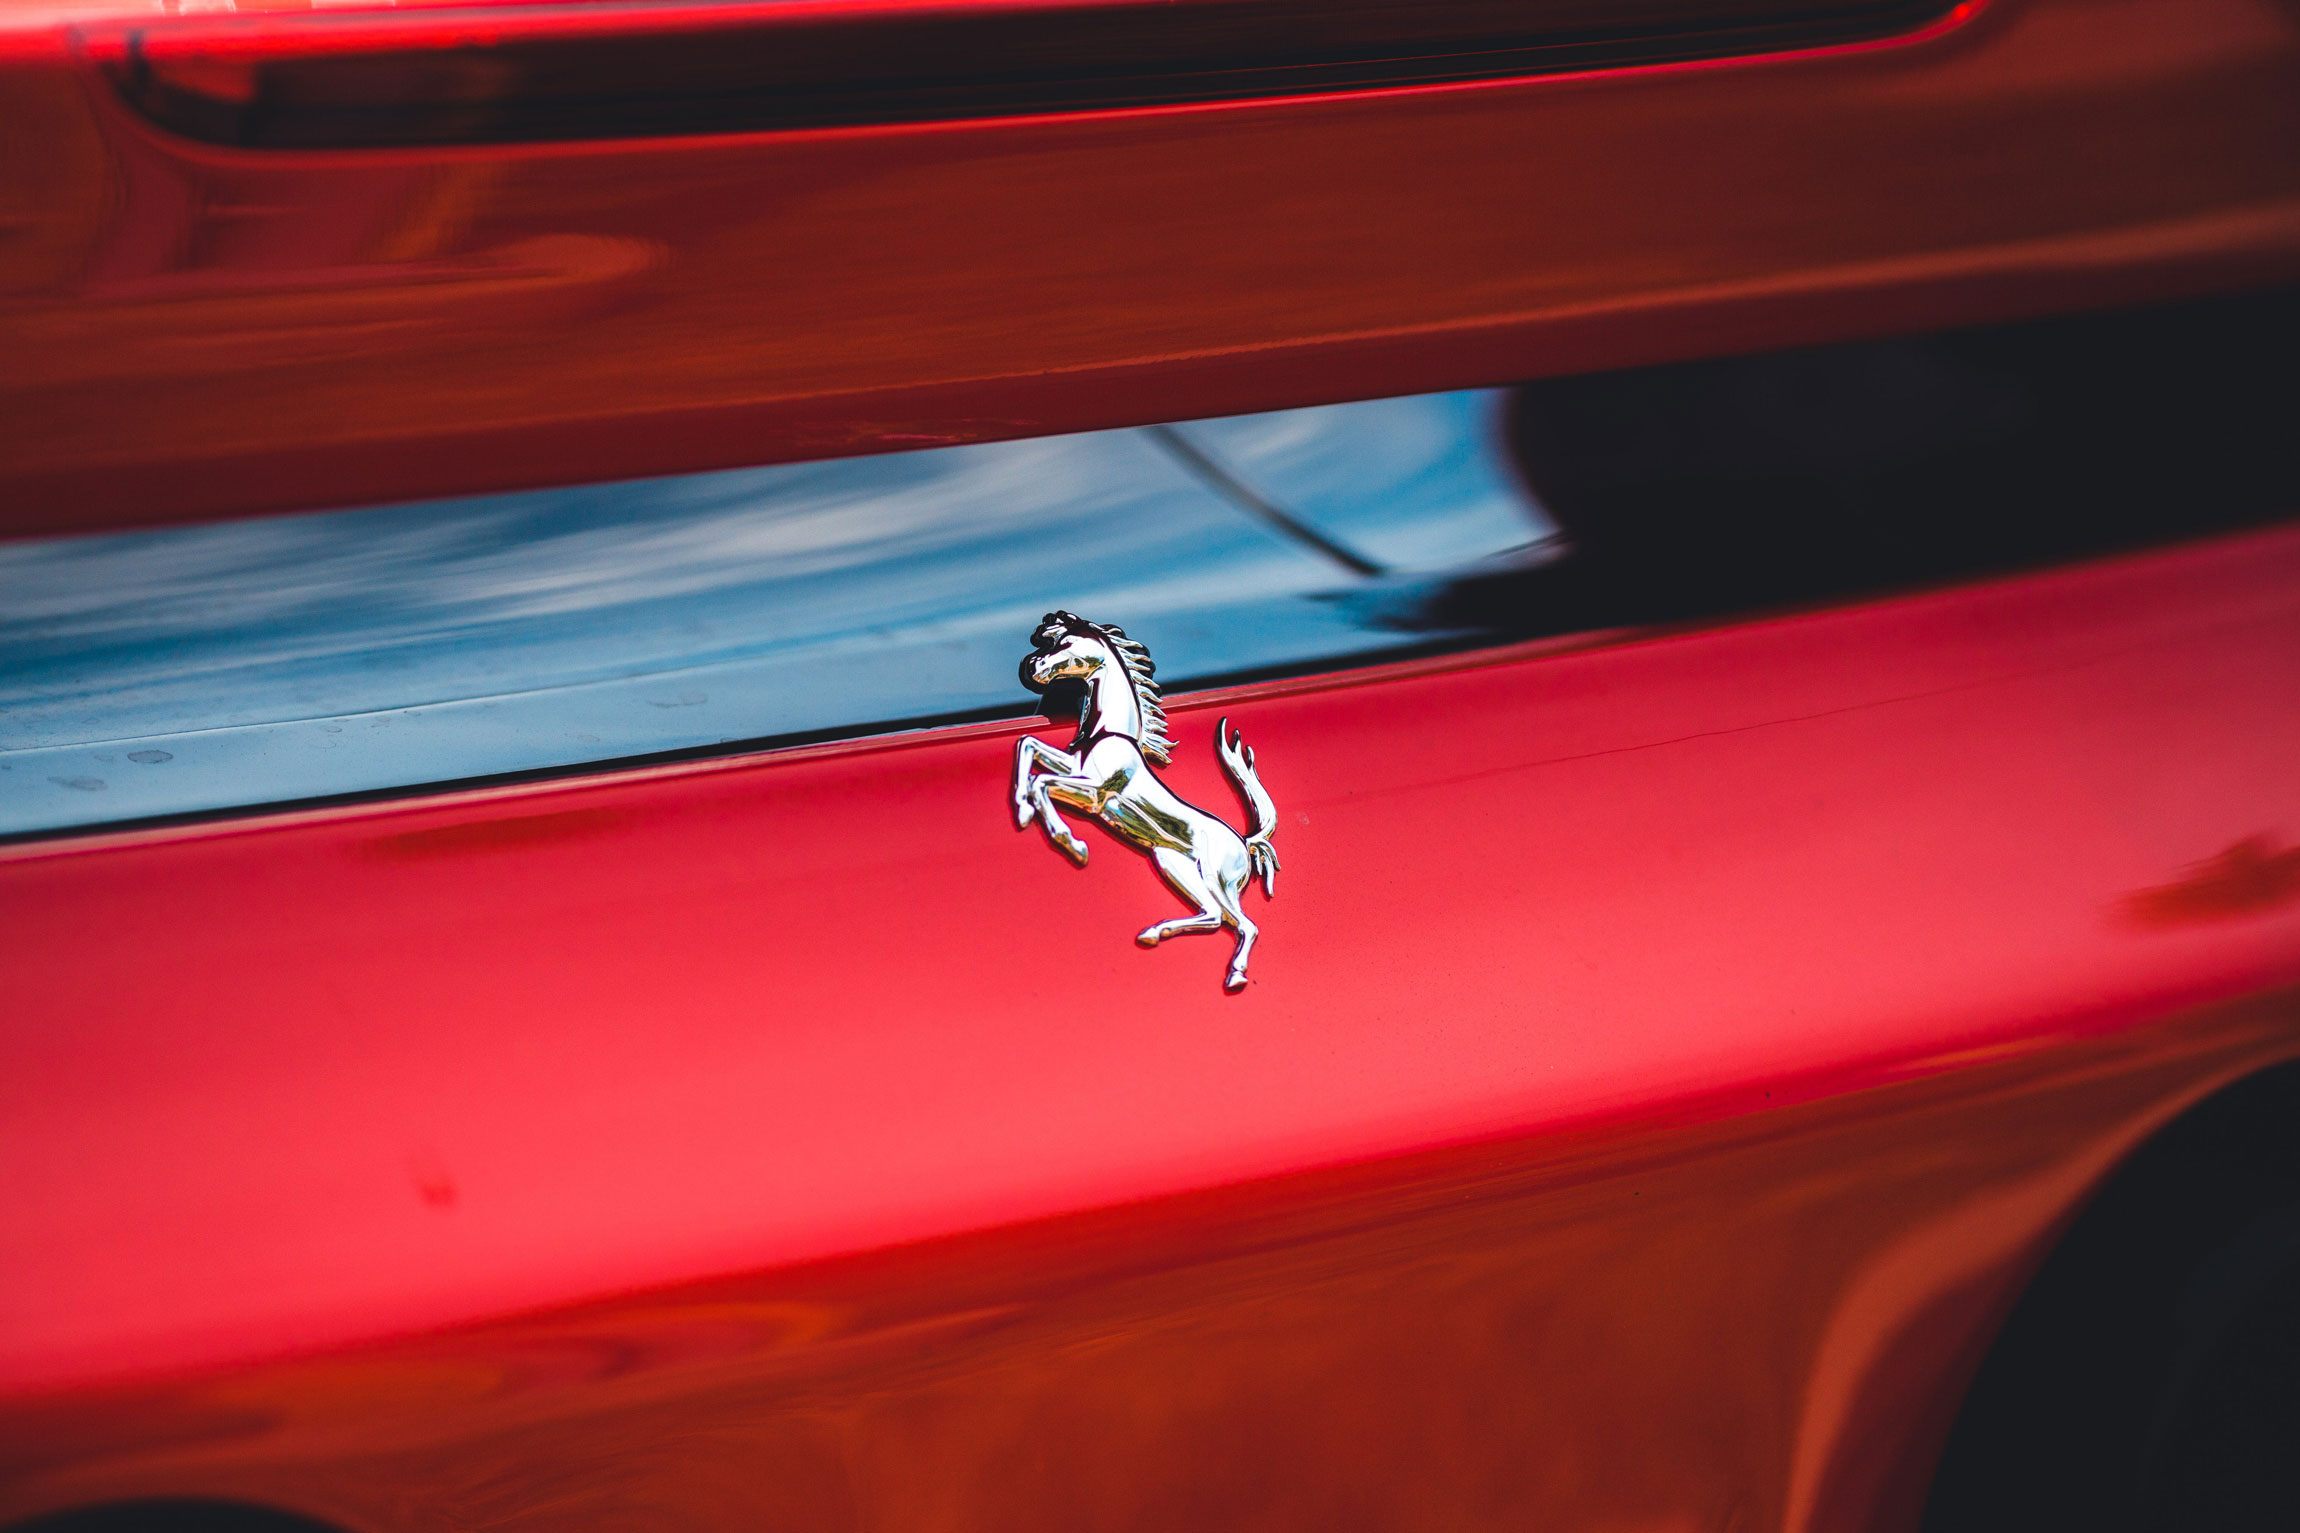 Detailaufnahme des Ferrari Logos